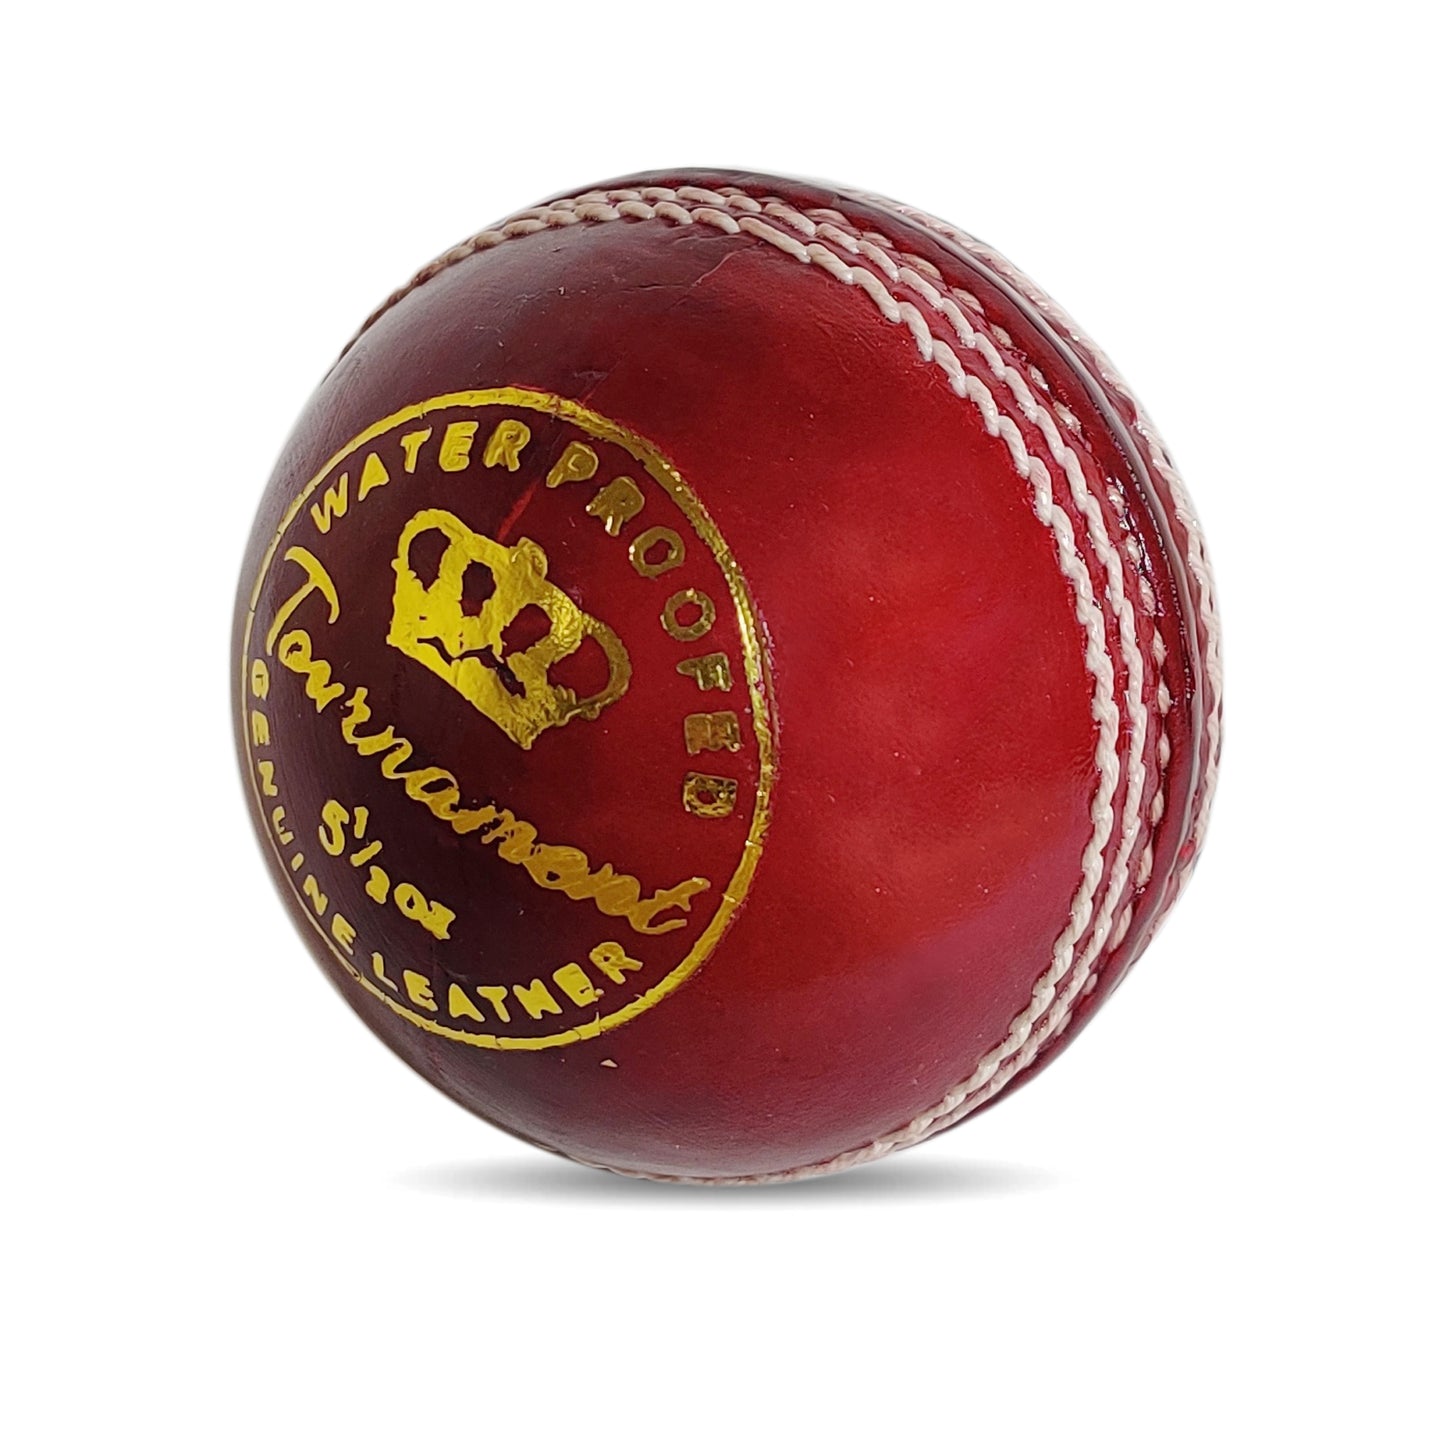 Prokick Tournament Four Piece Leather Cricket Ball, 1Pc (Red) - Best Price online Prokicksports.com